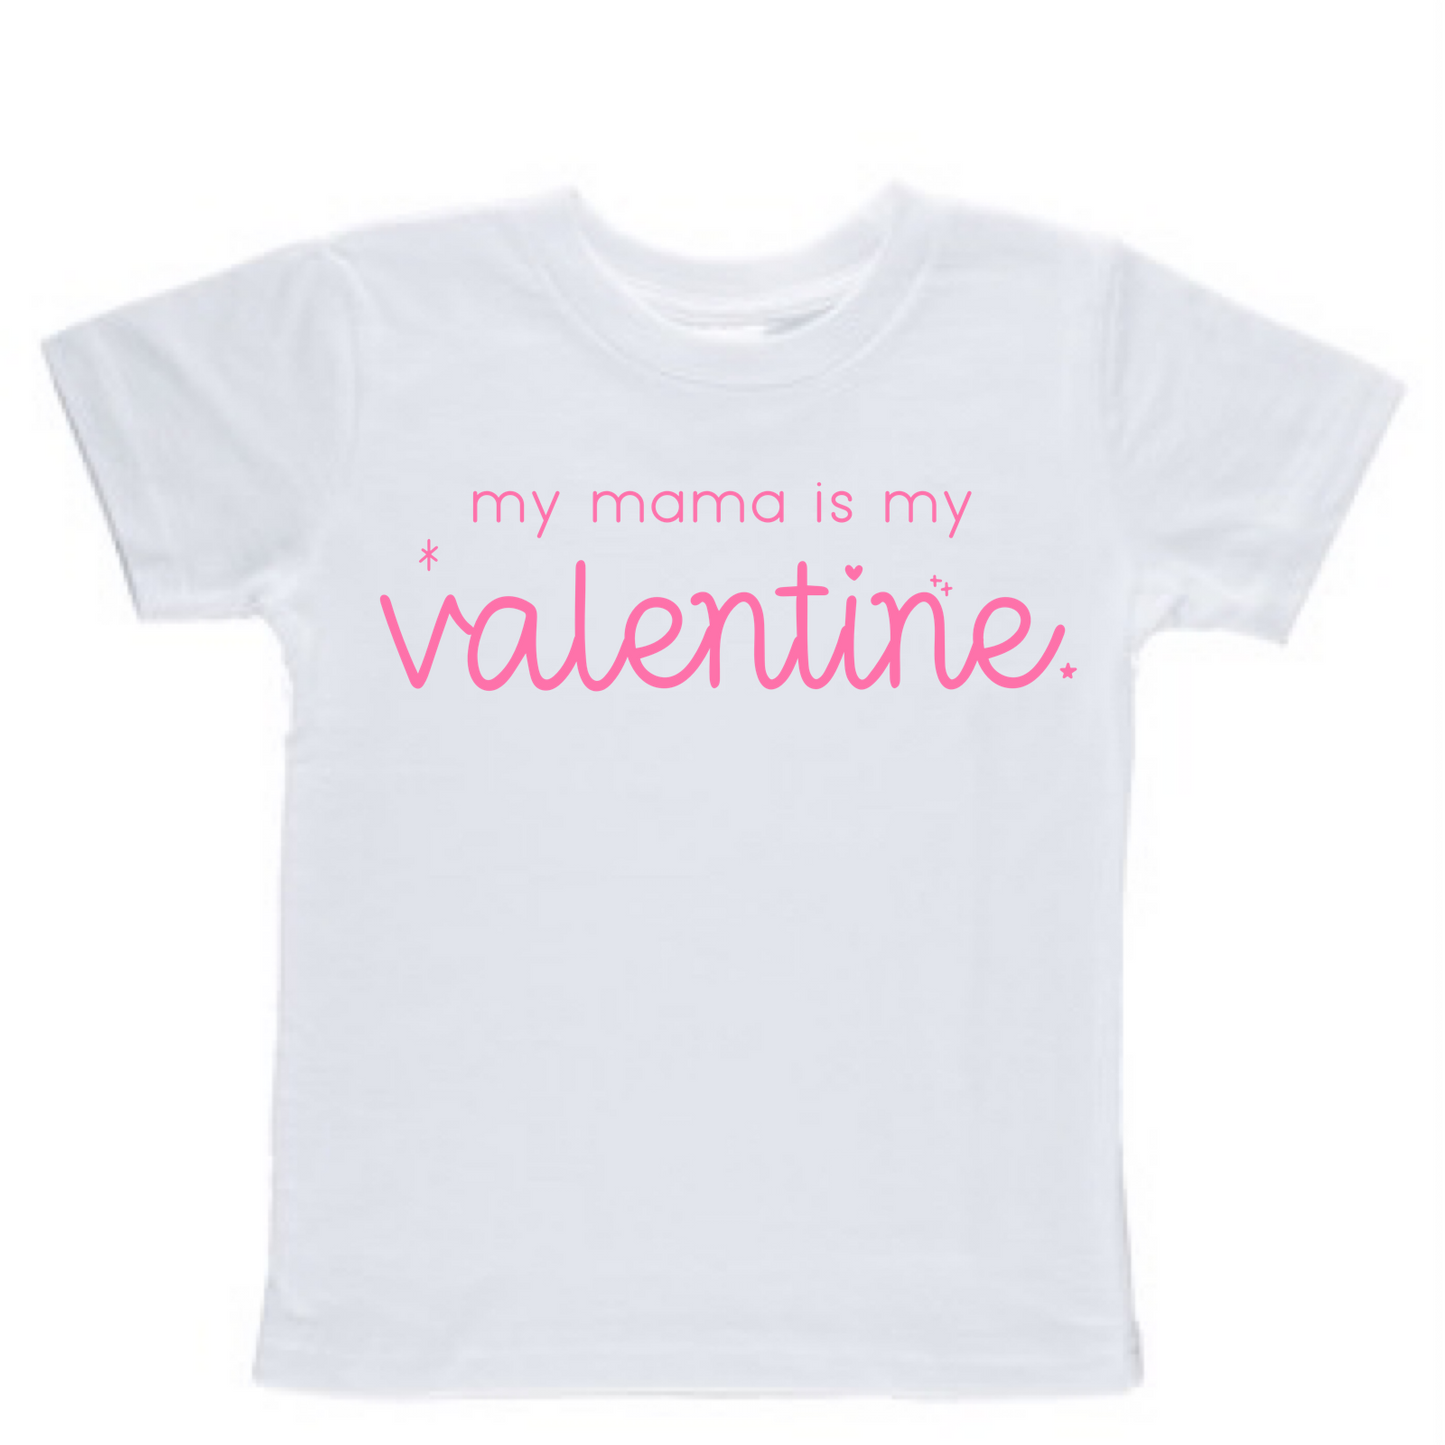 Mama is my valentine